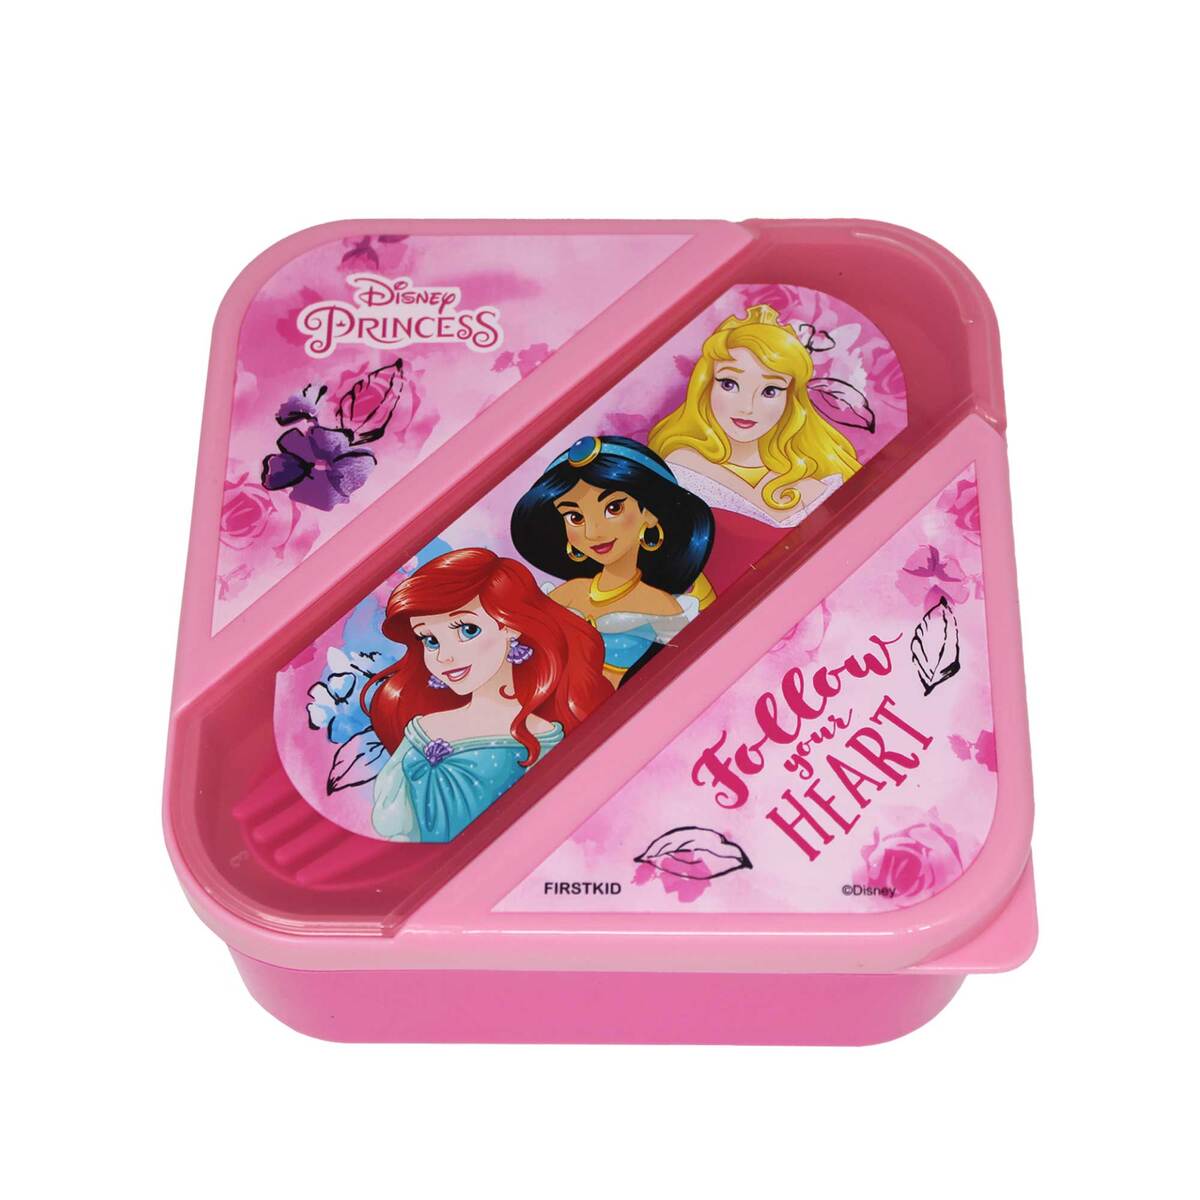 Disney Princess Princess Lunch Box with Cutlery